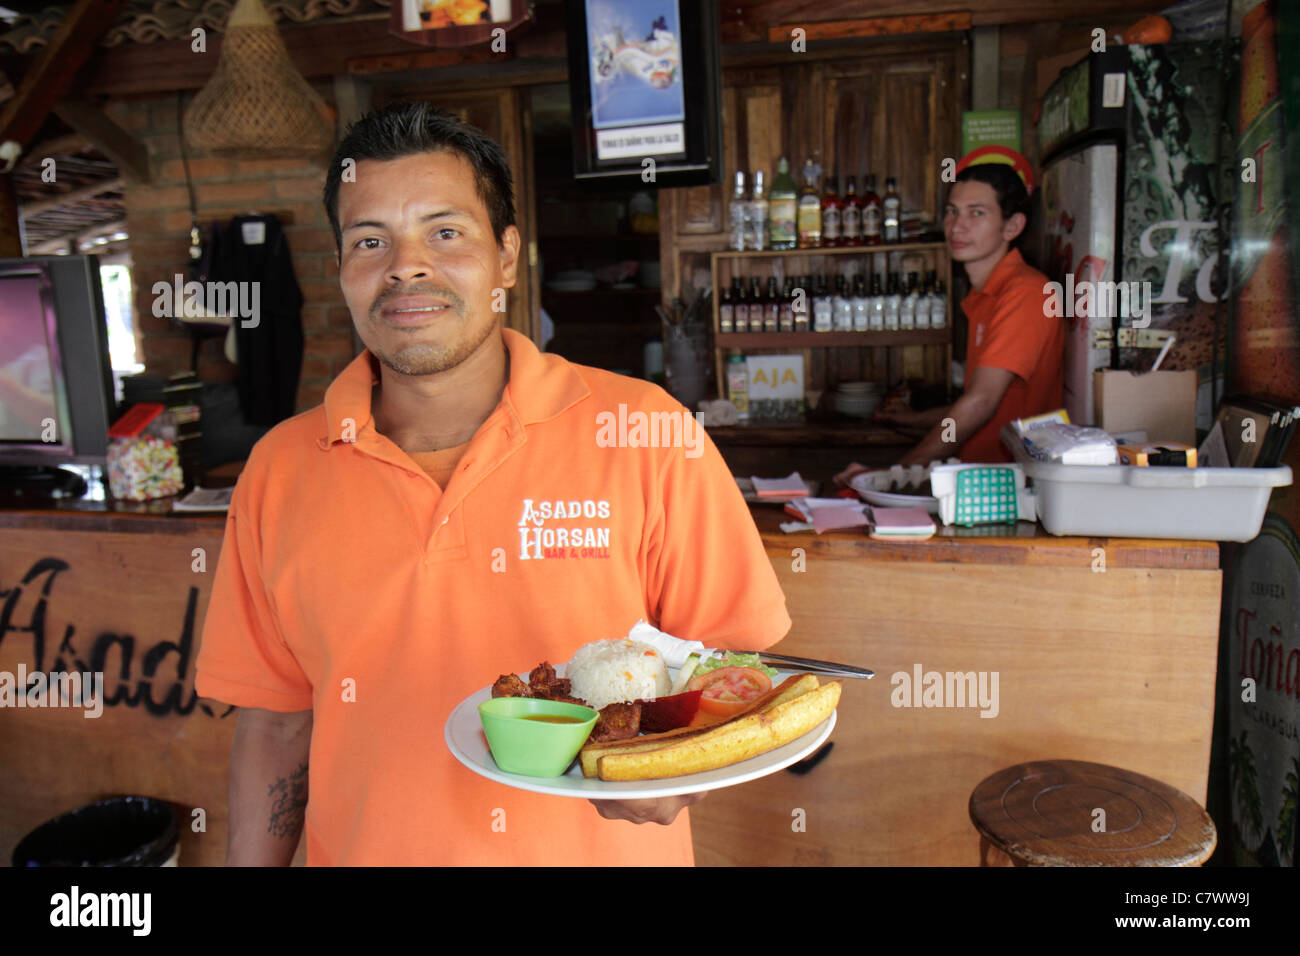 Managua Nicaragua,El Malecon,Puerto Salvador Allende,Lake Xolotlan,inland port,recreational area,Asados Horsan,restaurant restaurants food dining cafe Stock Photo